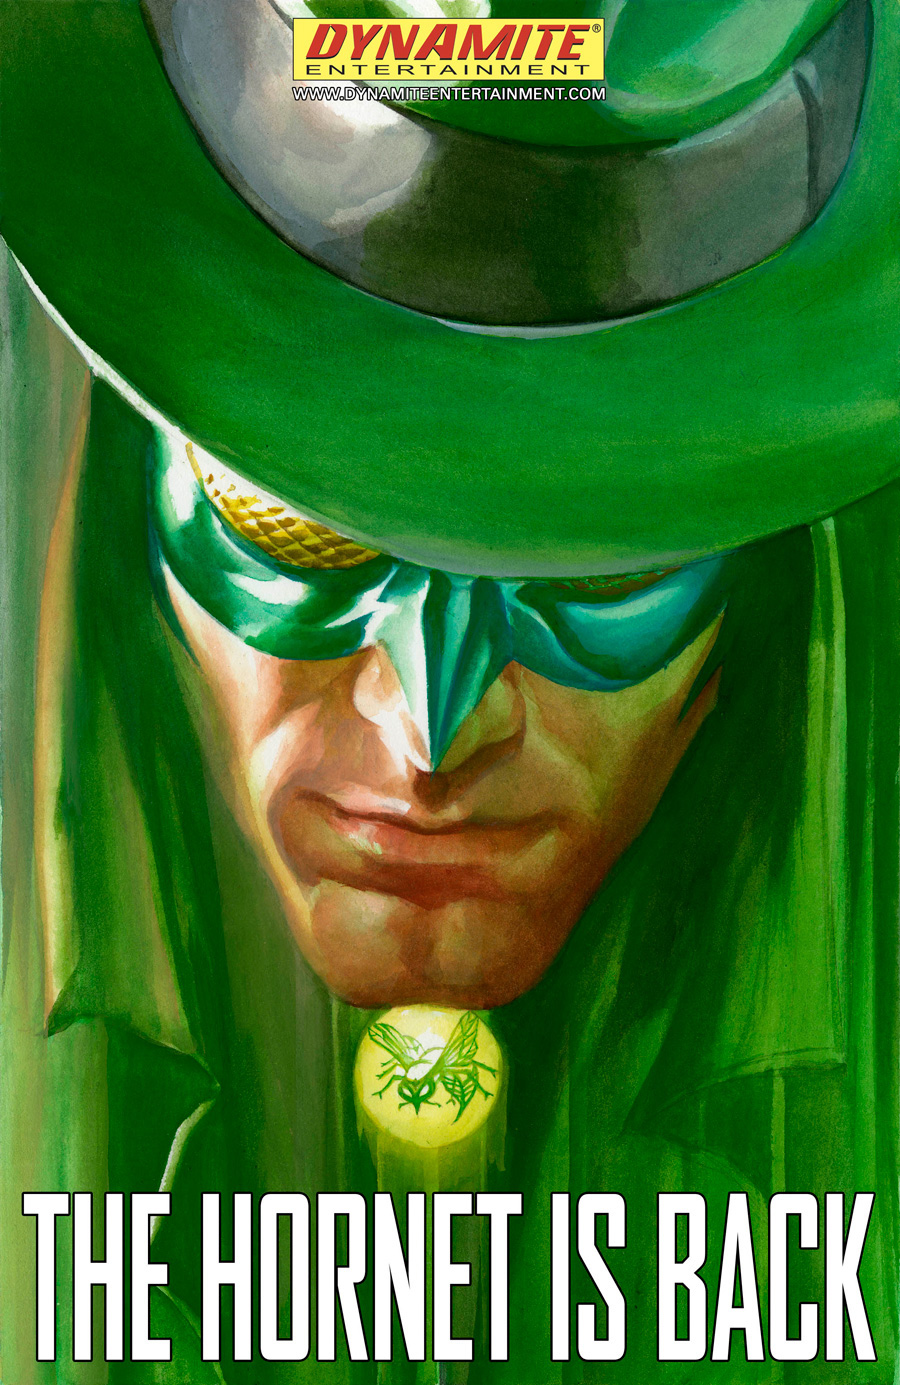 The Green Hornet (Comic Books) | Green Hornet Wiki | FANDOM powered by